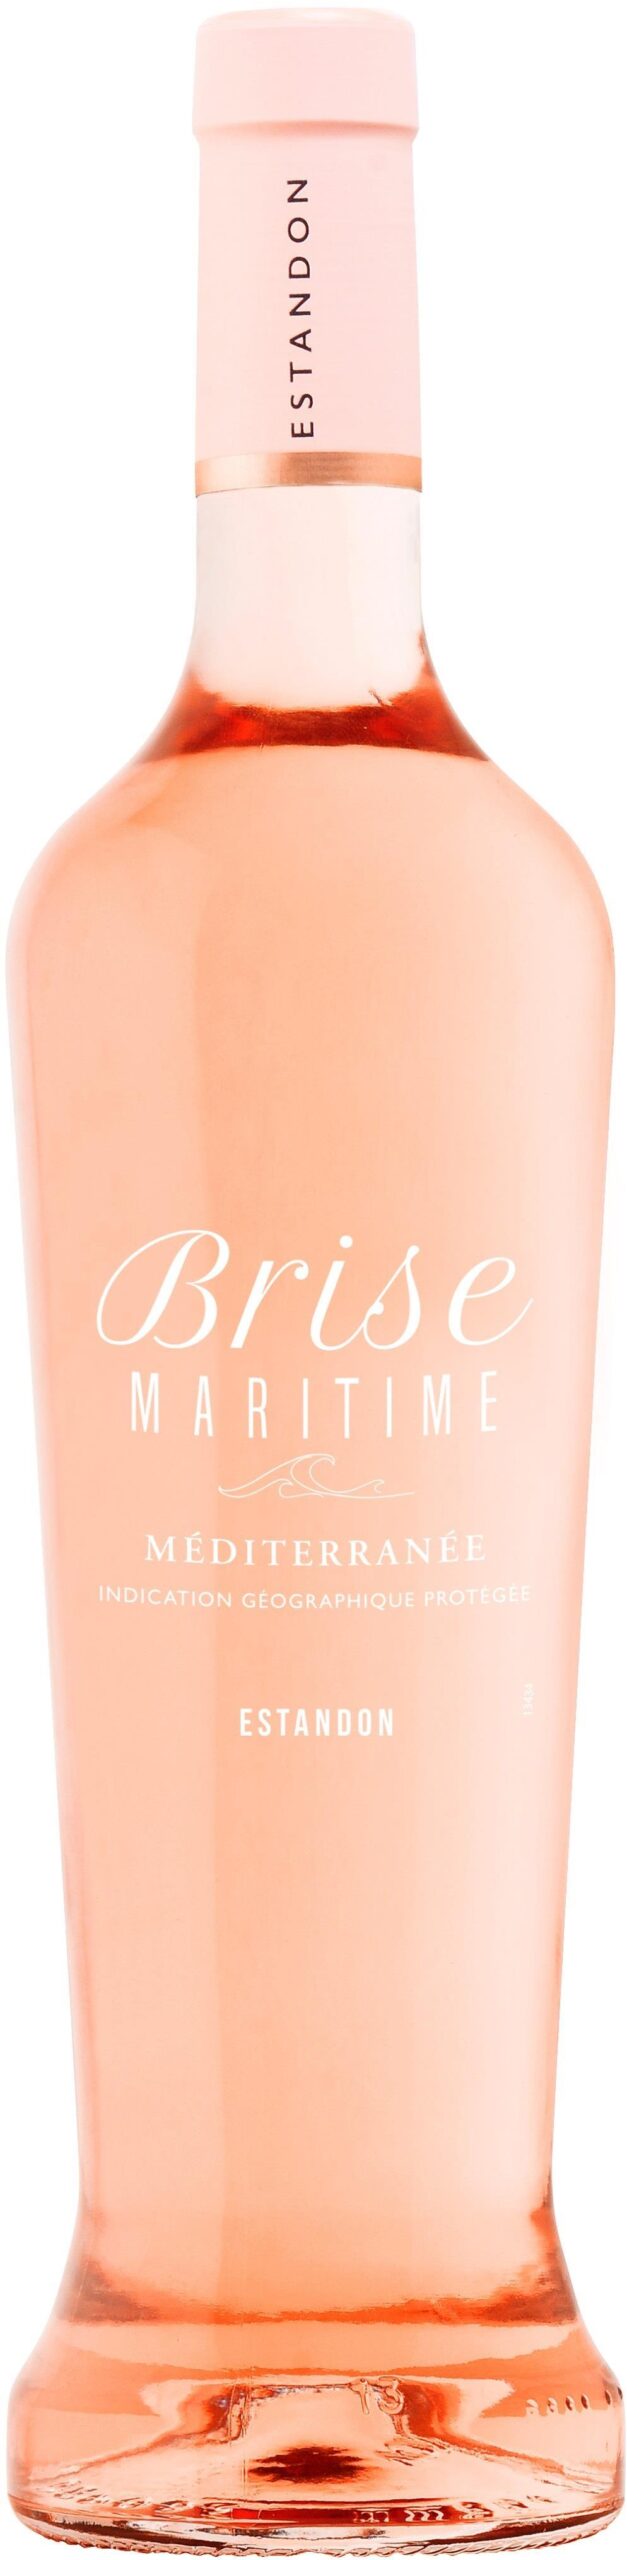 Brise Maritime estandon 1 scaled